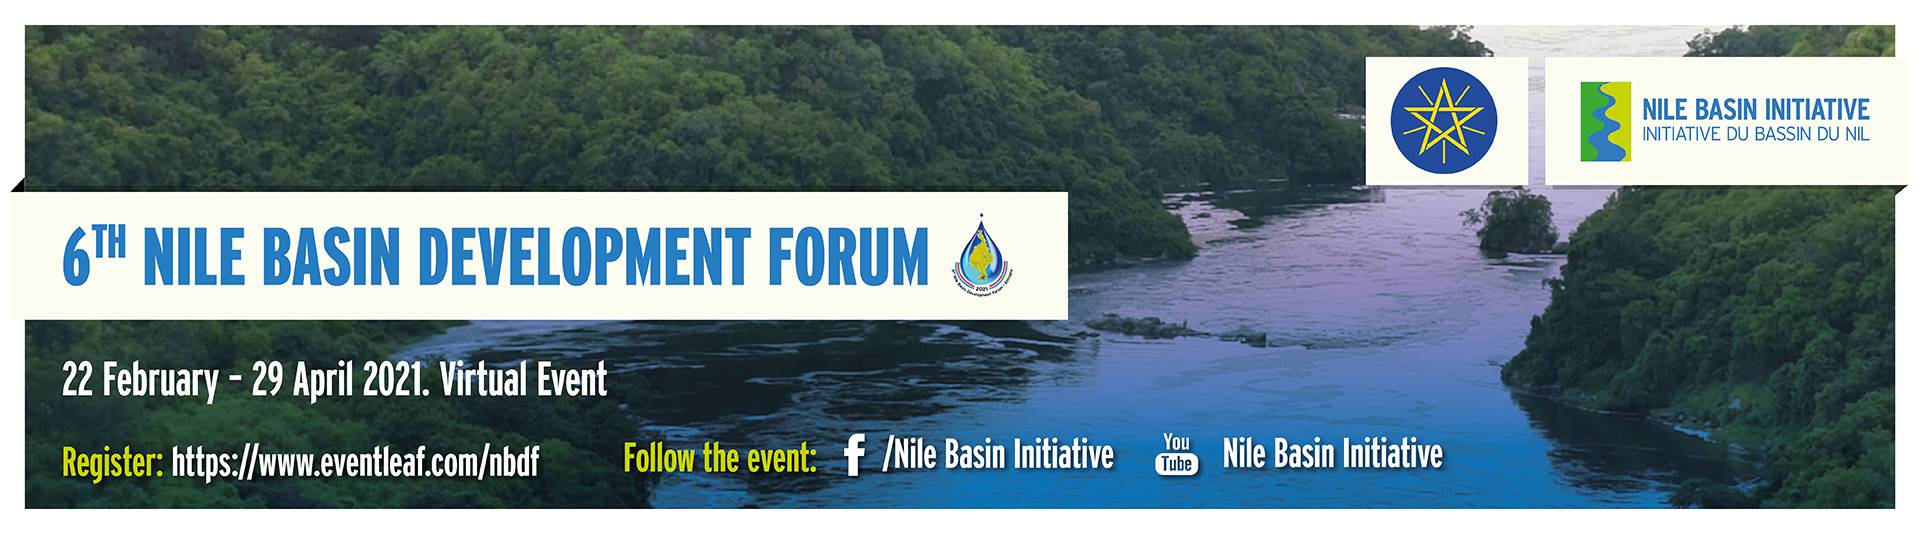  The 6th Nile Basin Development Forum (NBDF) Image